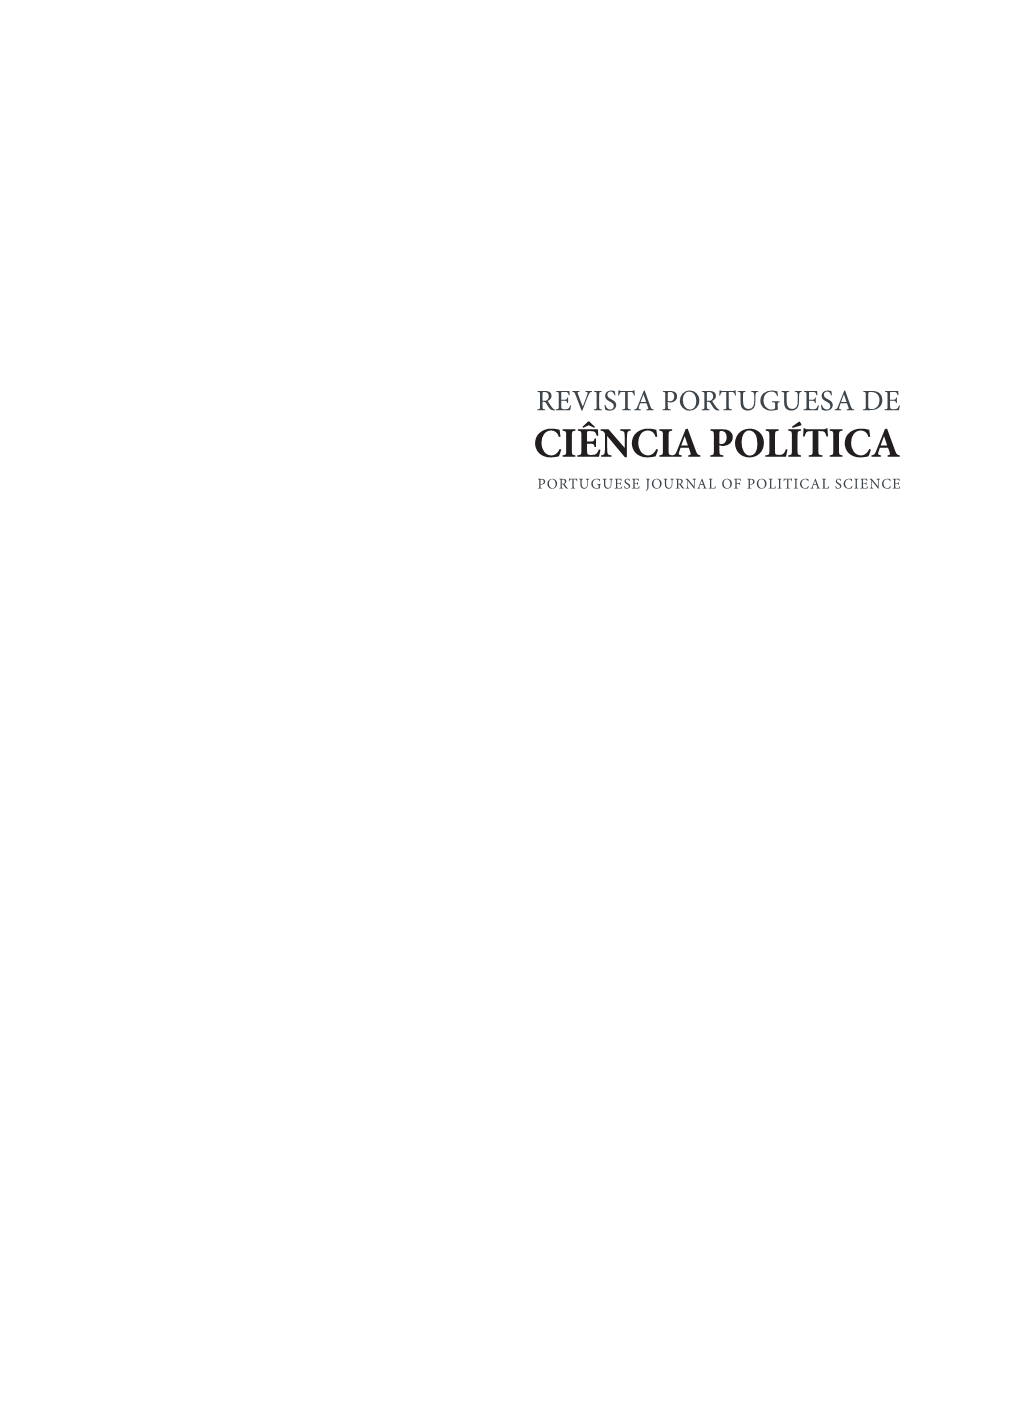 CIÊNCIA POLÍTICA PORTUGUESE JOURNAL of POLITICAL SCIENCE Revista Portuguesa De Ciência Política Portuguese Journal of Political Science Número 6 - 2016